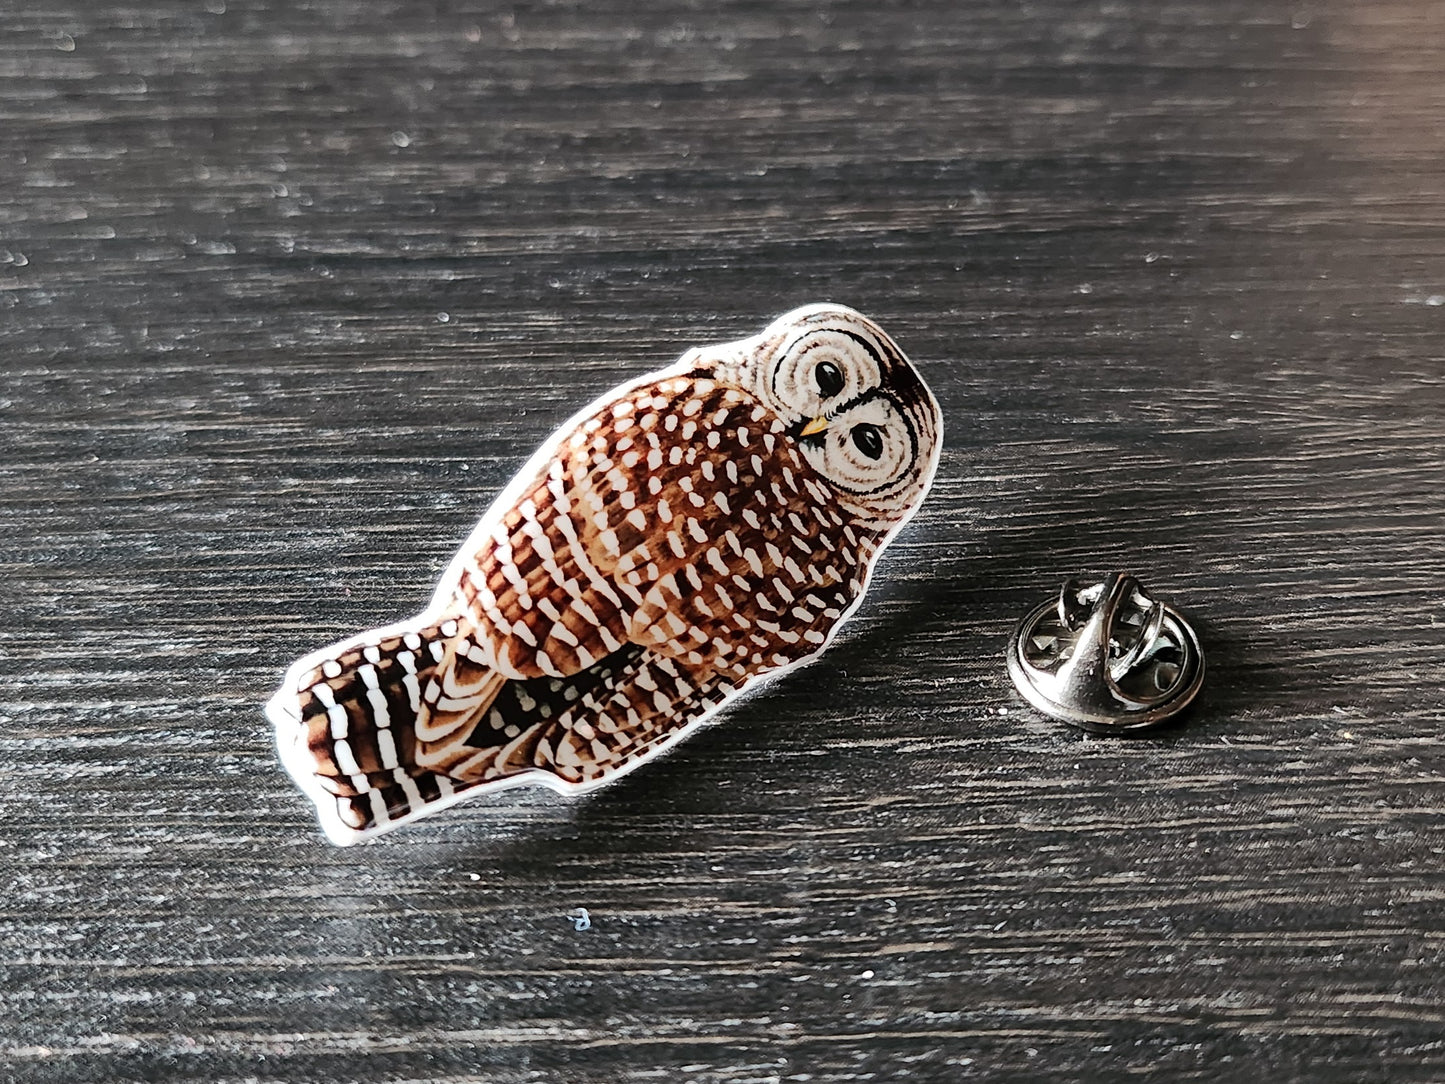 Barred Owl - Resin Coated Polystyrene Pin - 100% Handmade Bird Pin